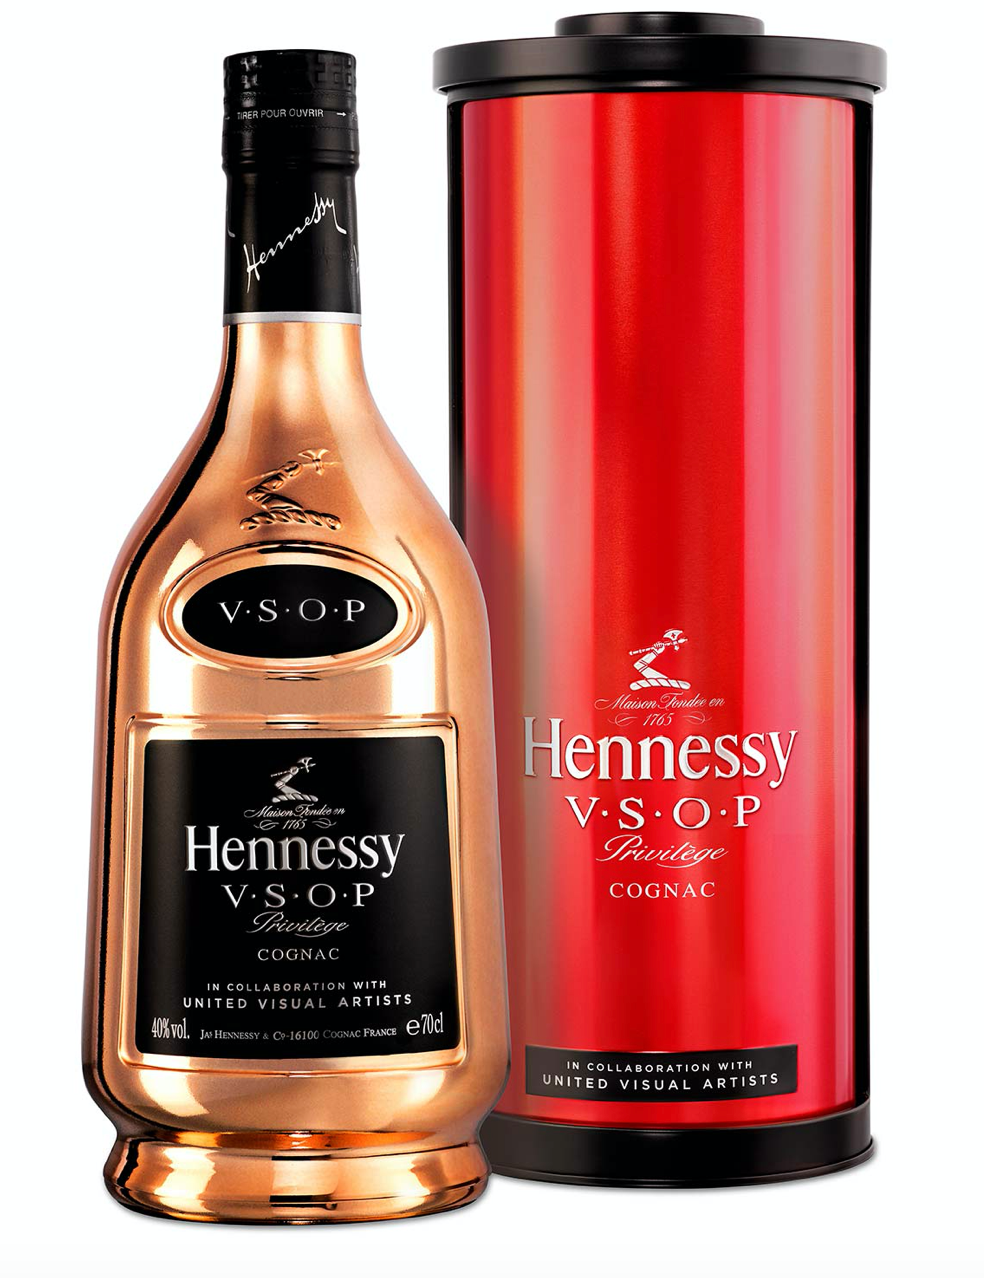 Moët Hennessy  Presentation Products